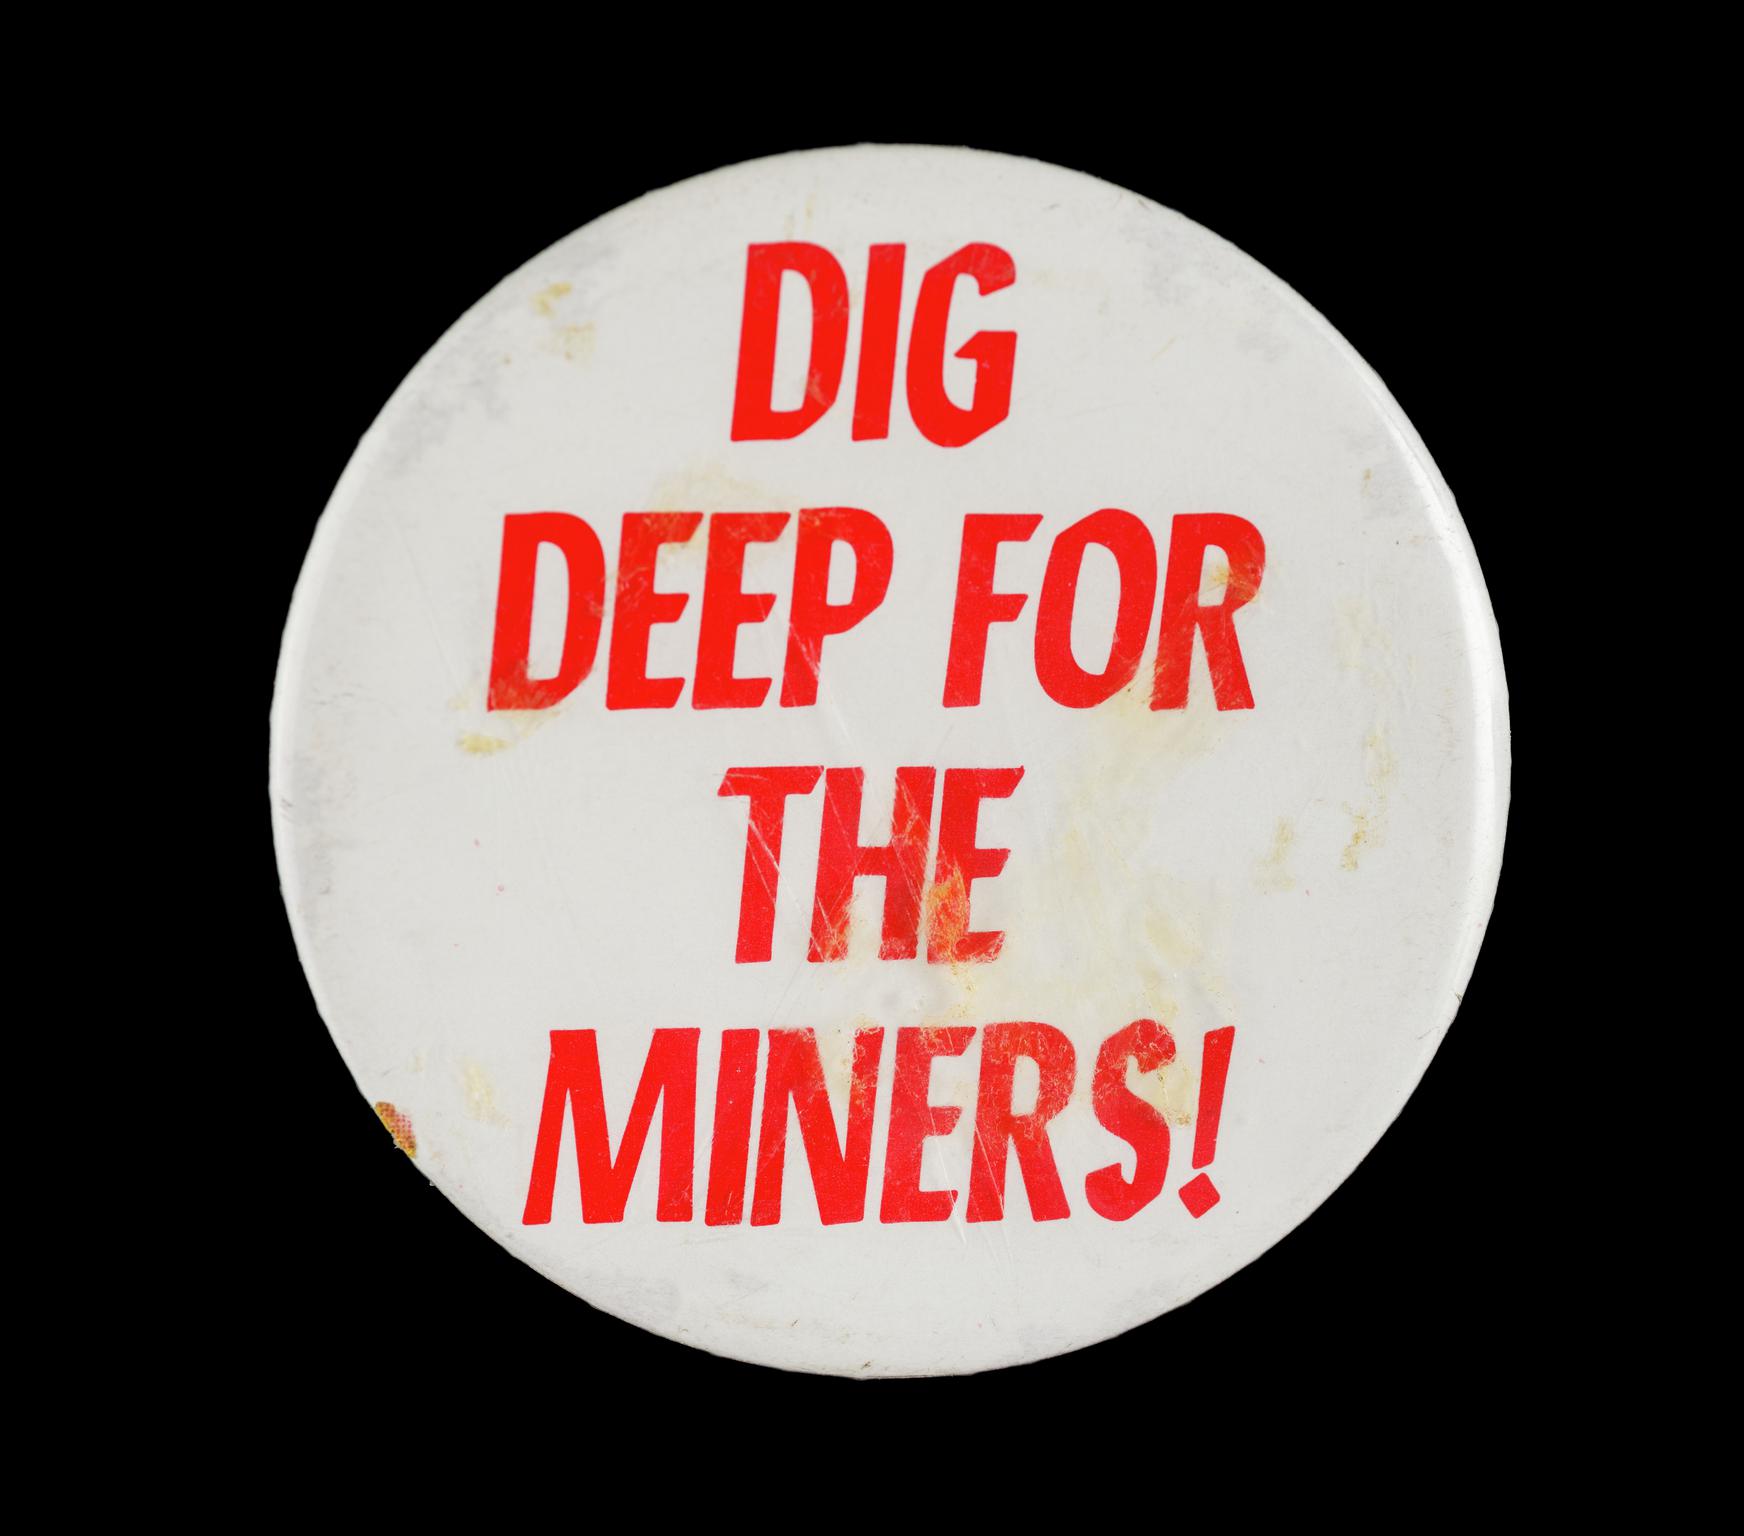 Miners strike badge